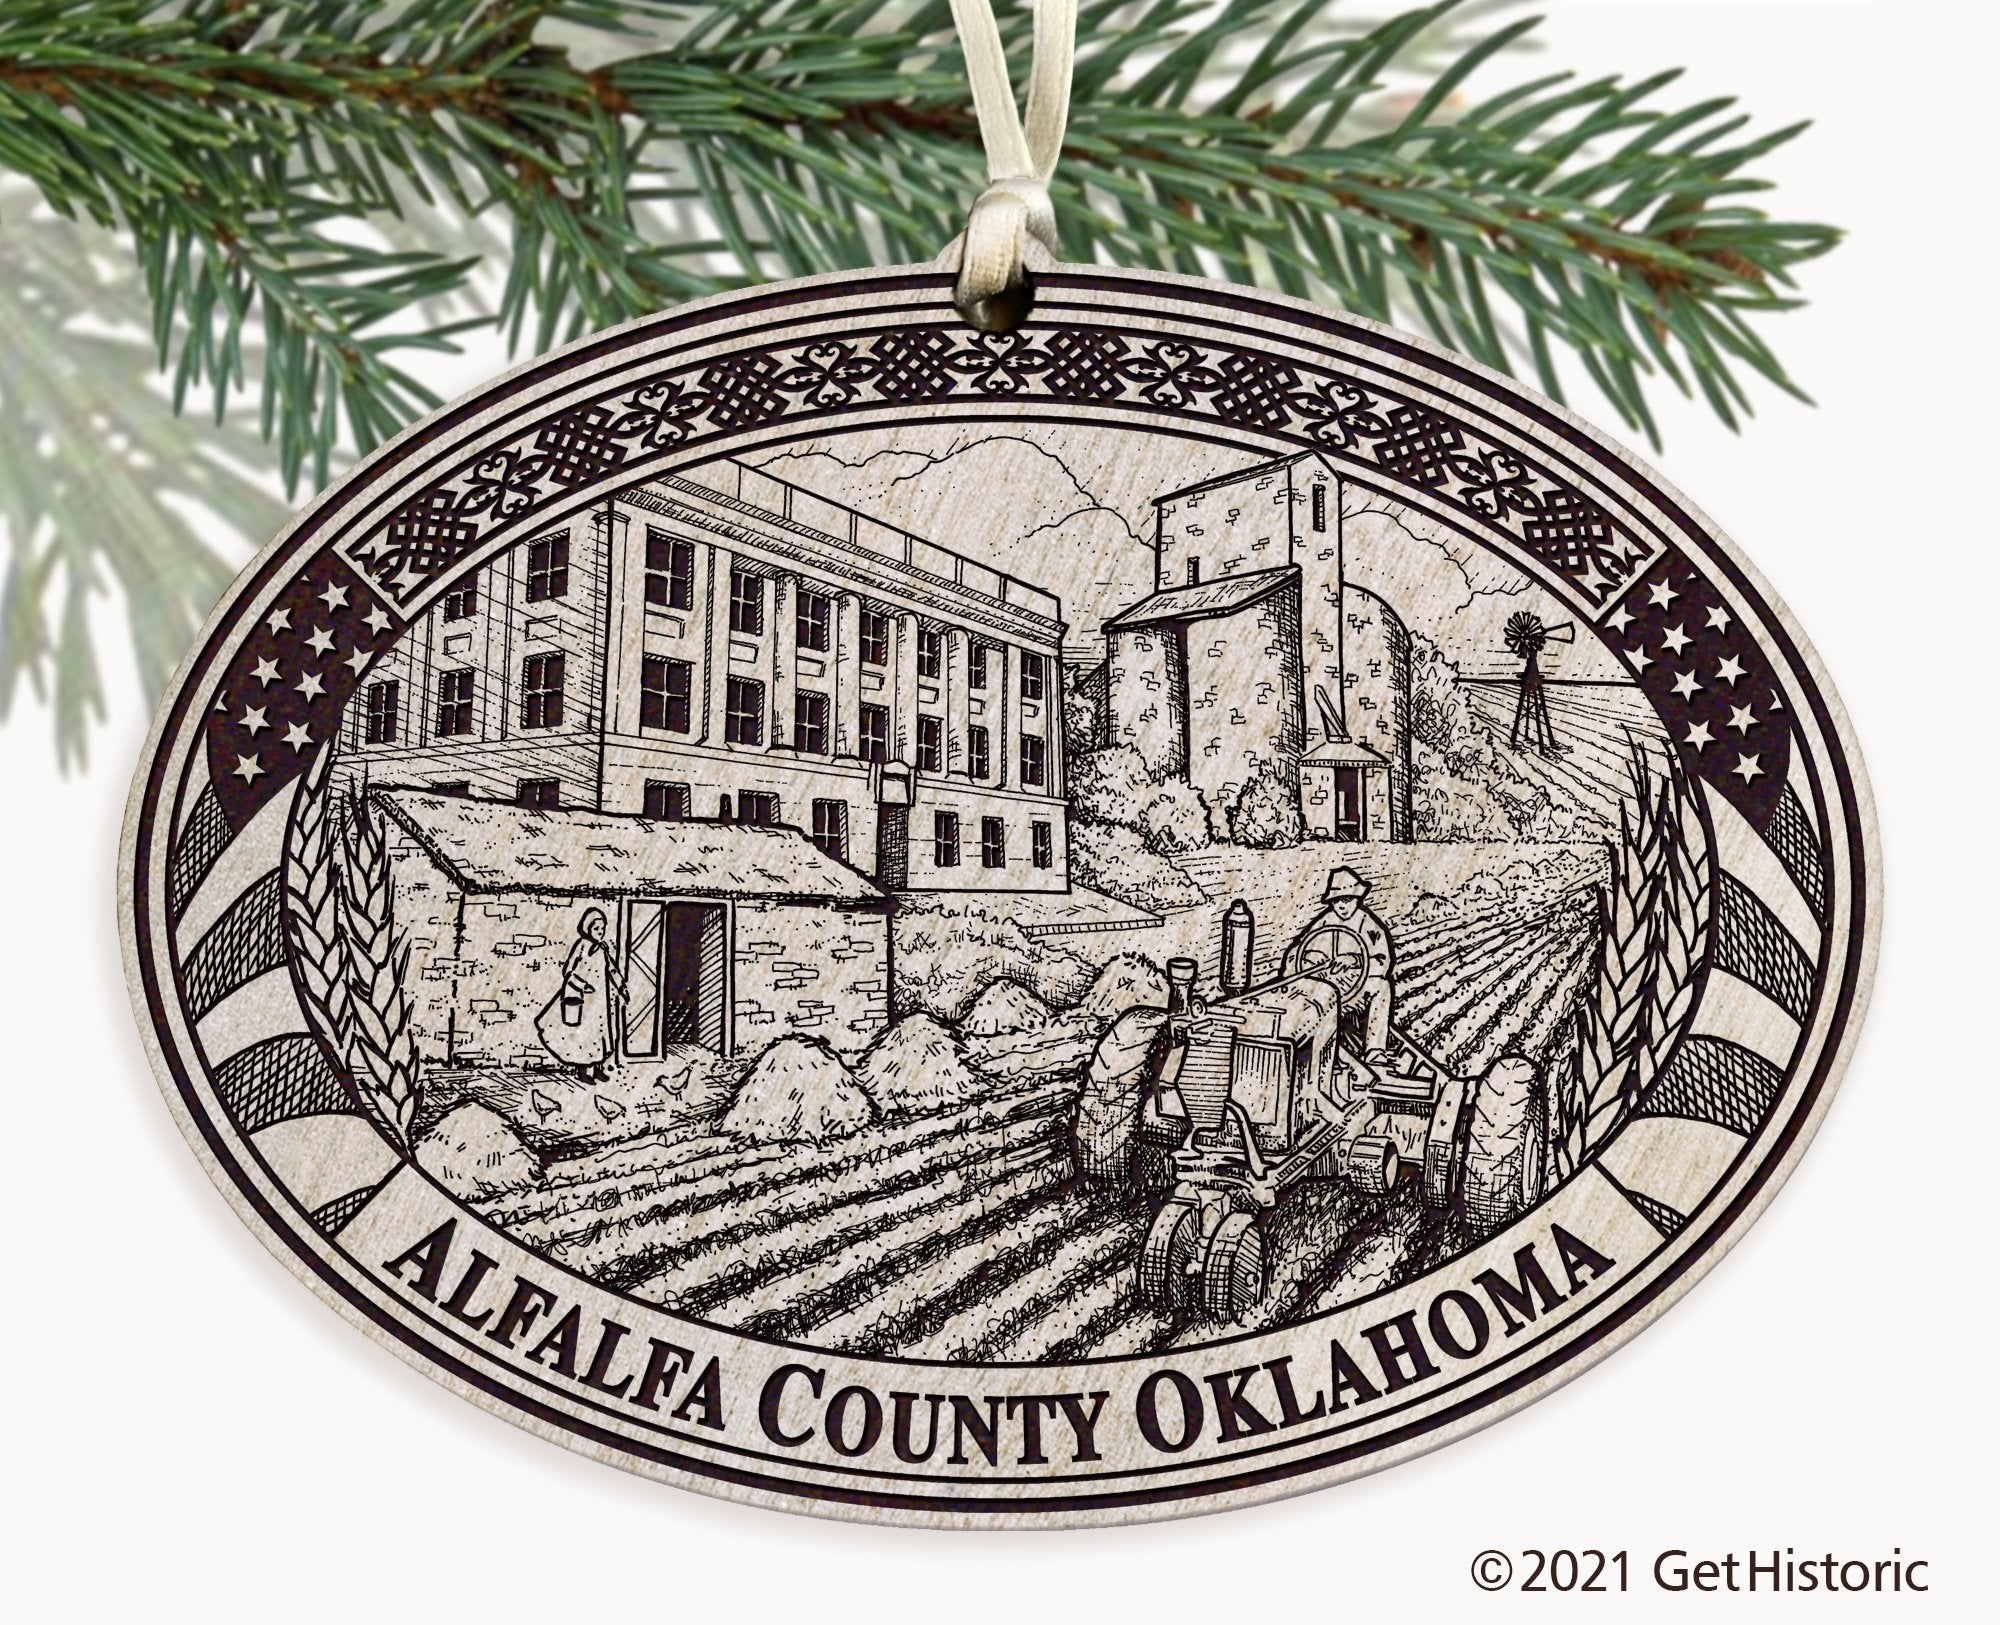 Alfalfa County Oklahoma Engraved Ornament